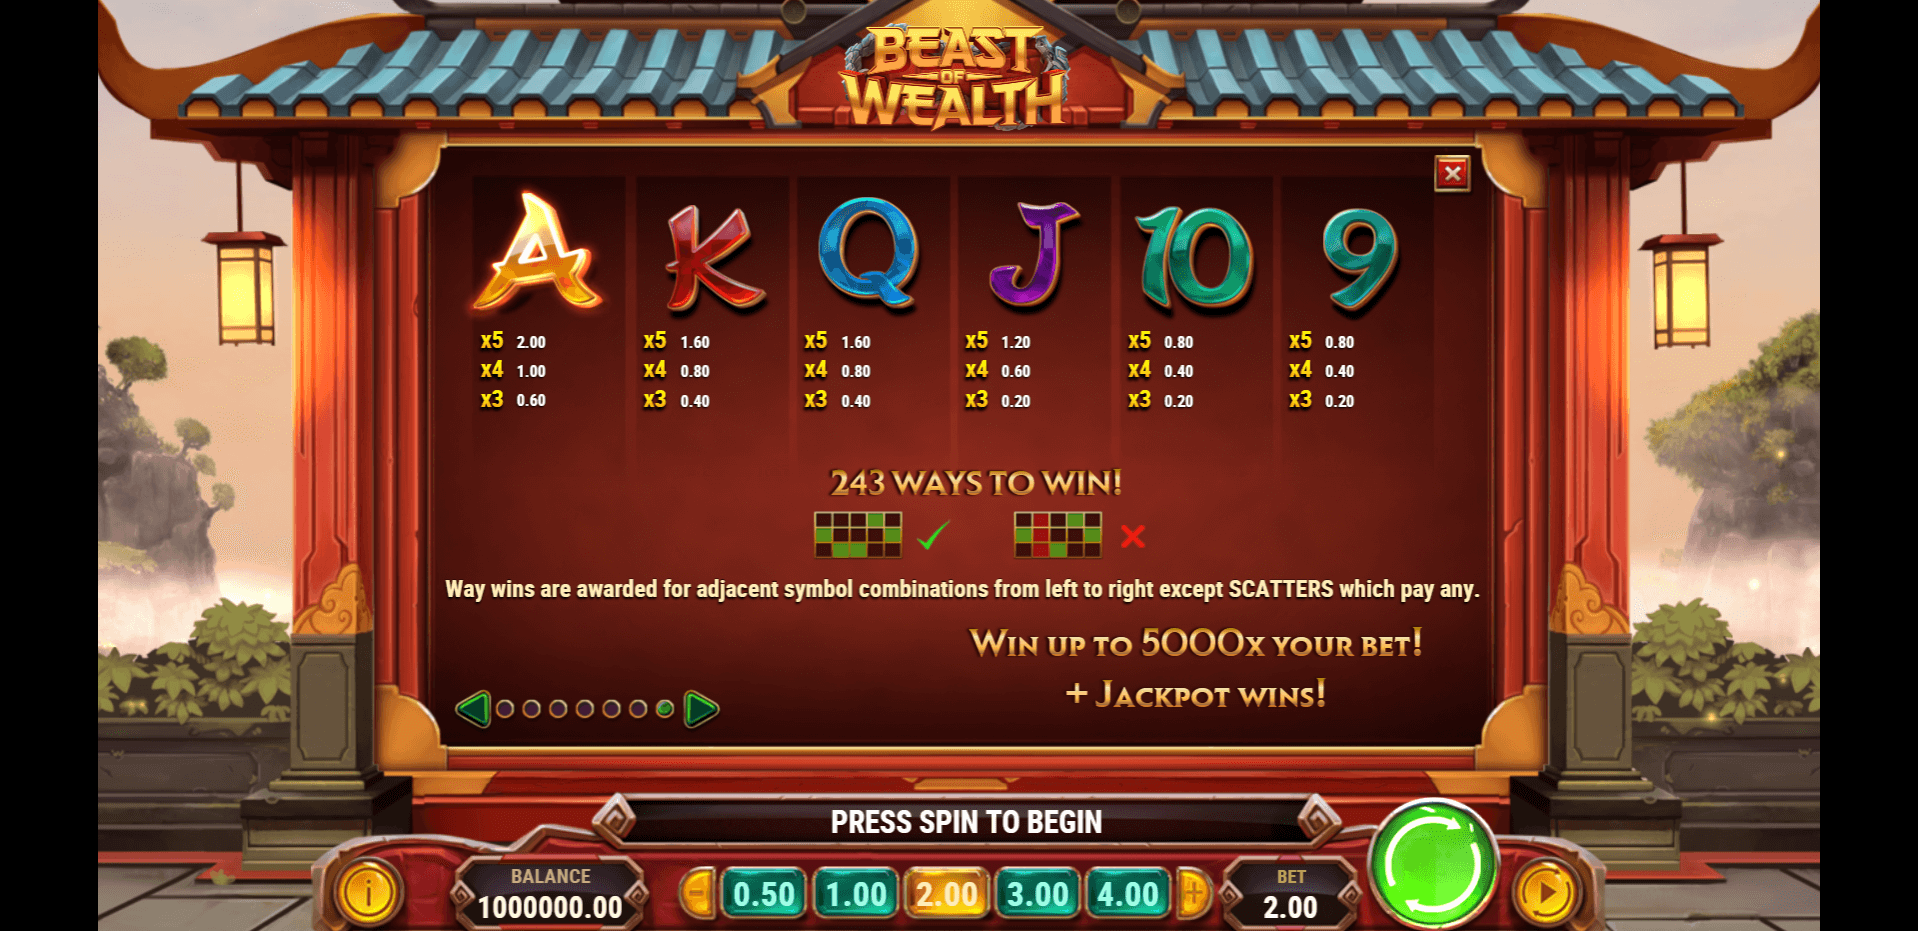 beast of wealth slot machine detail image 3